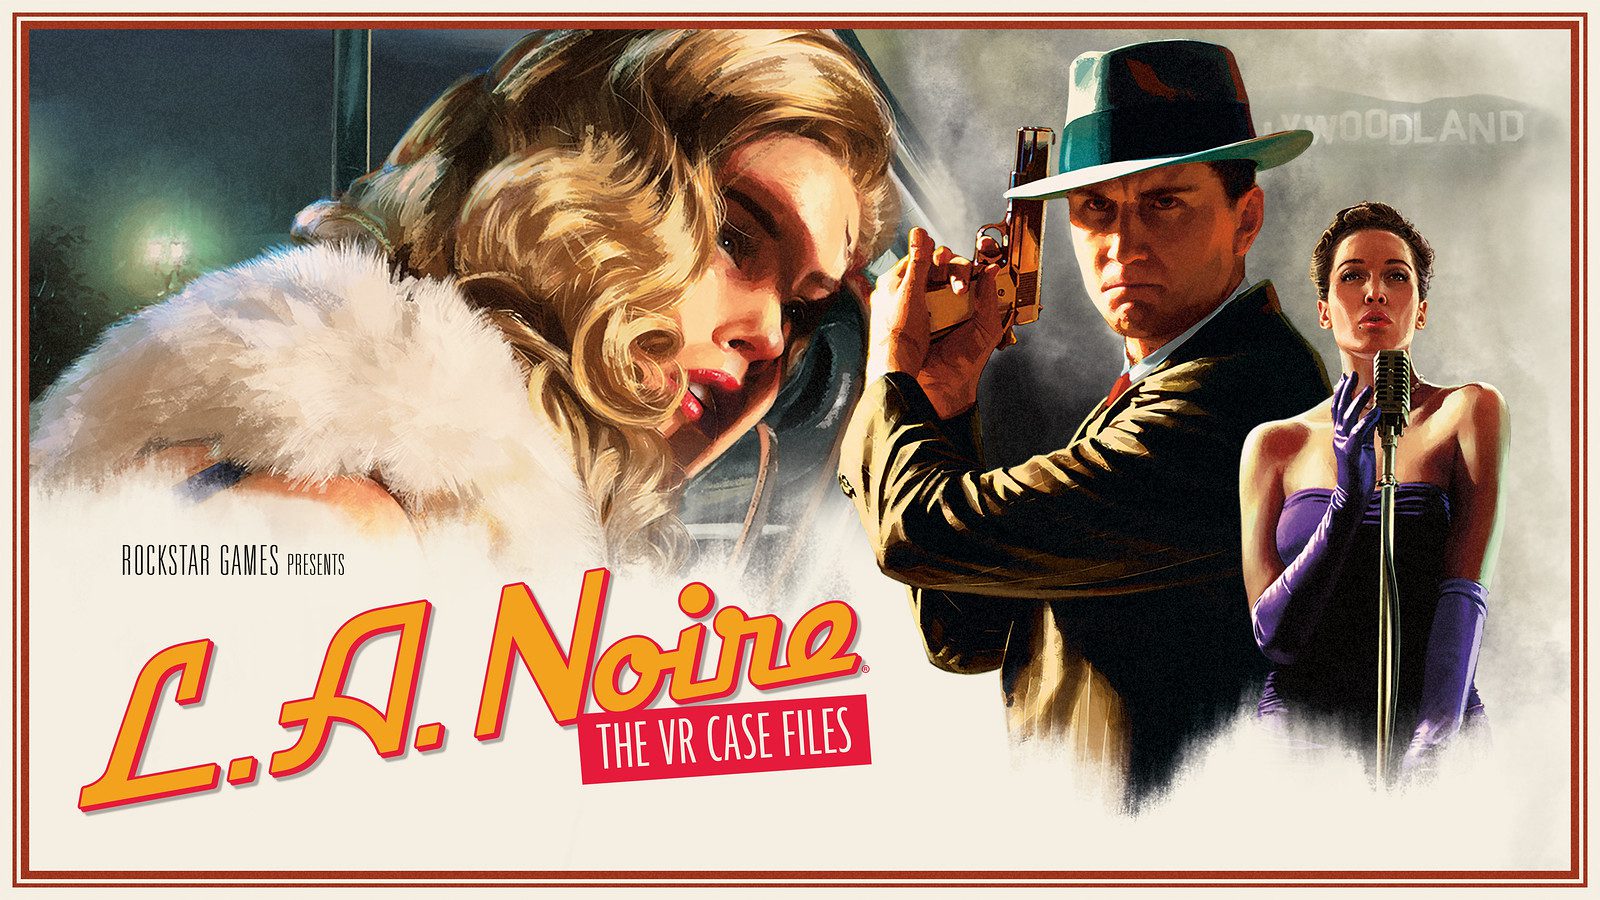 L.A. Noire: The VR Case Files on PS4